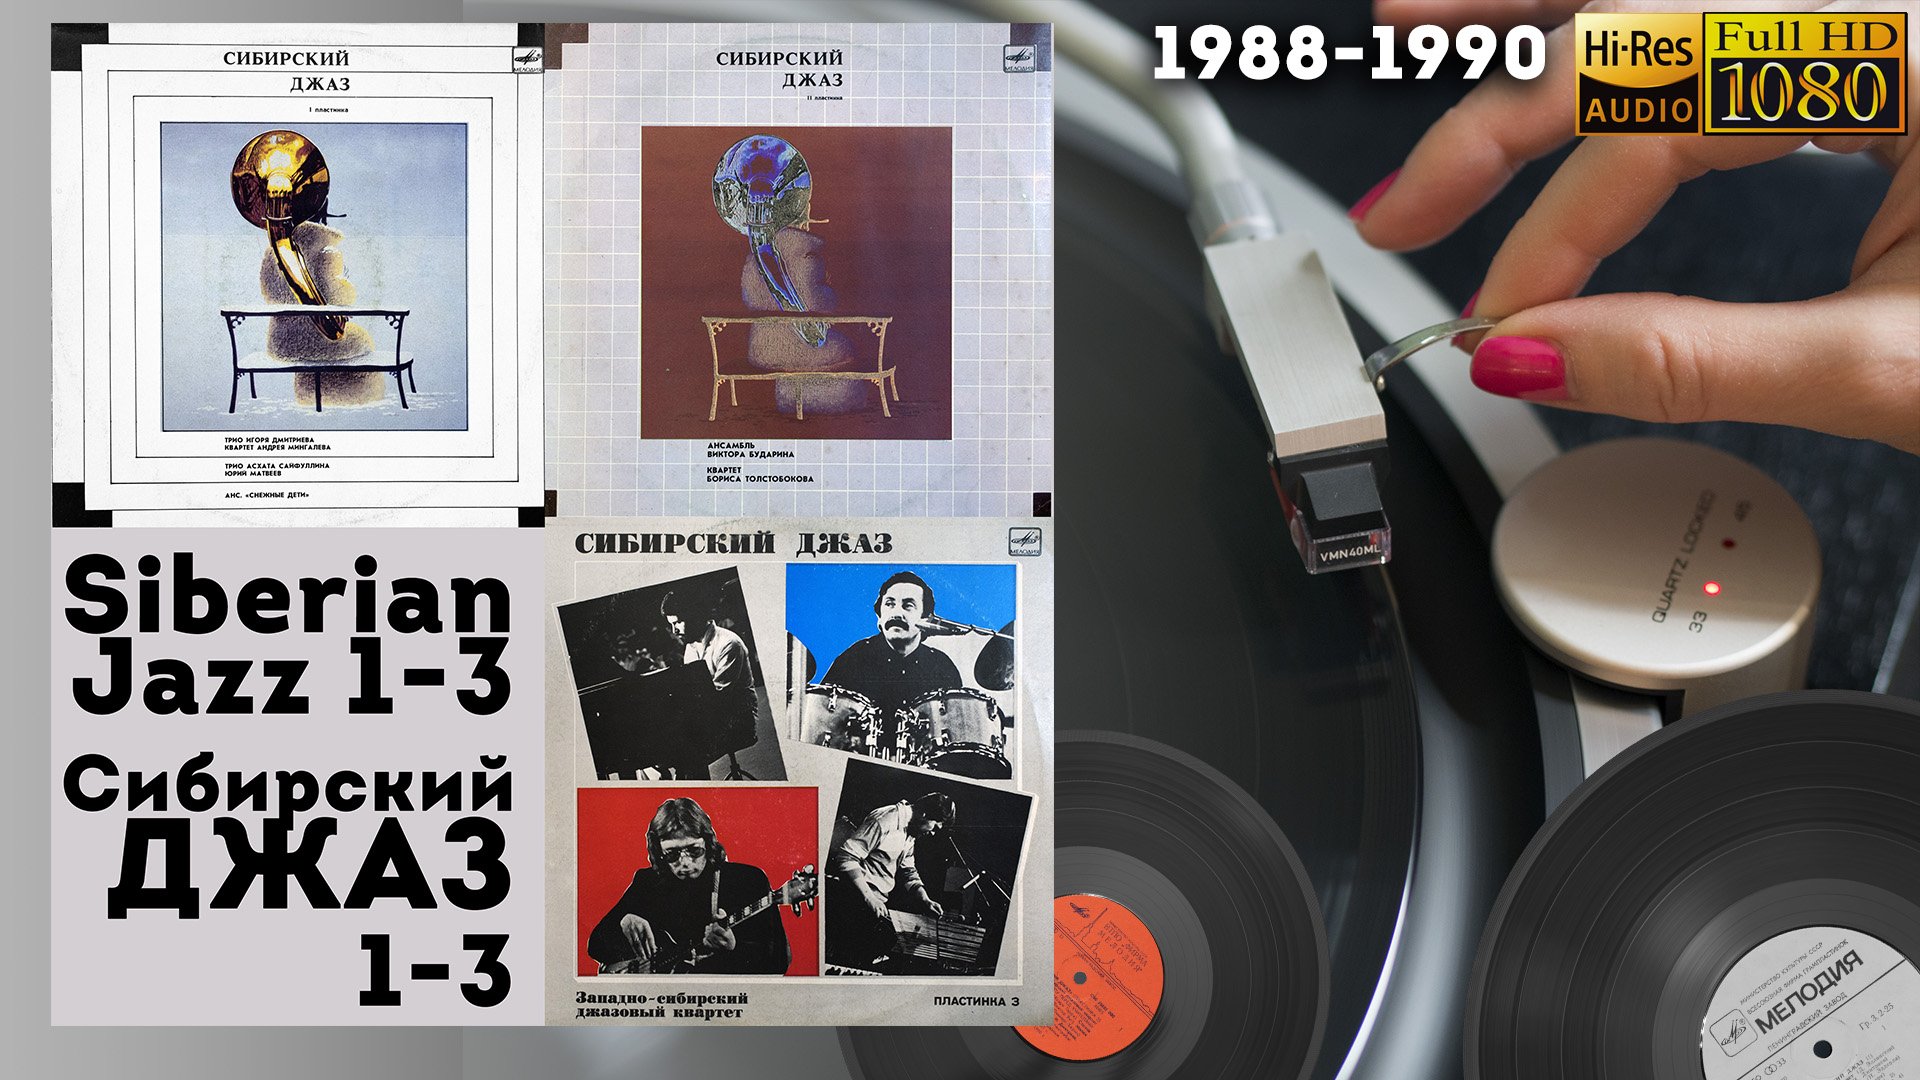 Сибирский Джаз 1-3 / Siberian Jazz 1-3 FULL,  Soviet jazz, Vinyl video 4K, 24bit/96kHz